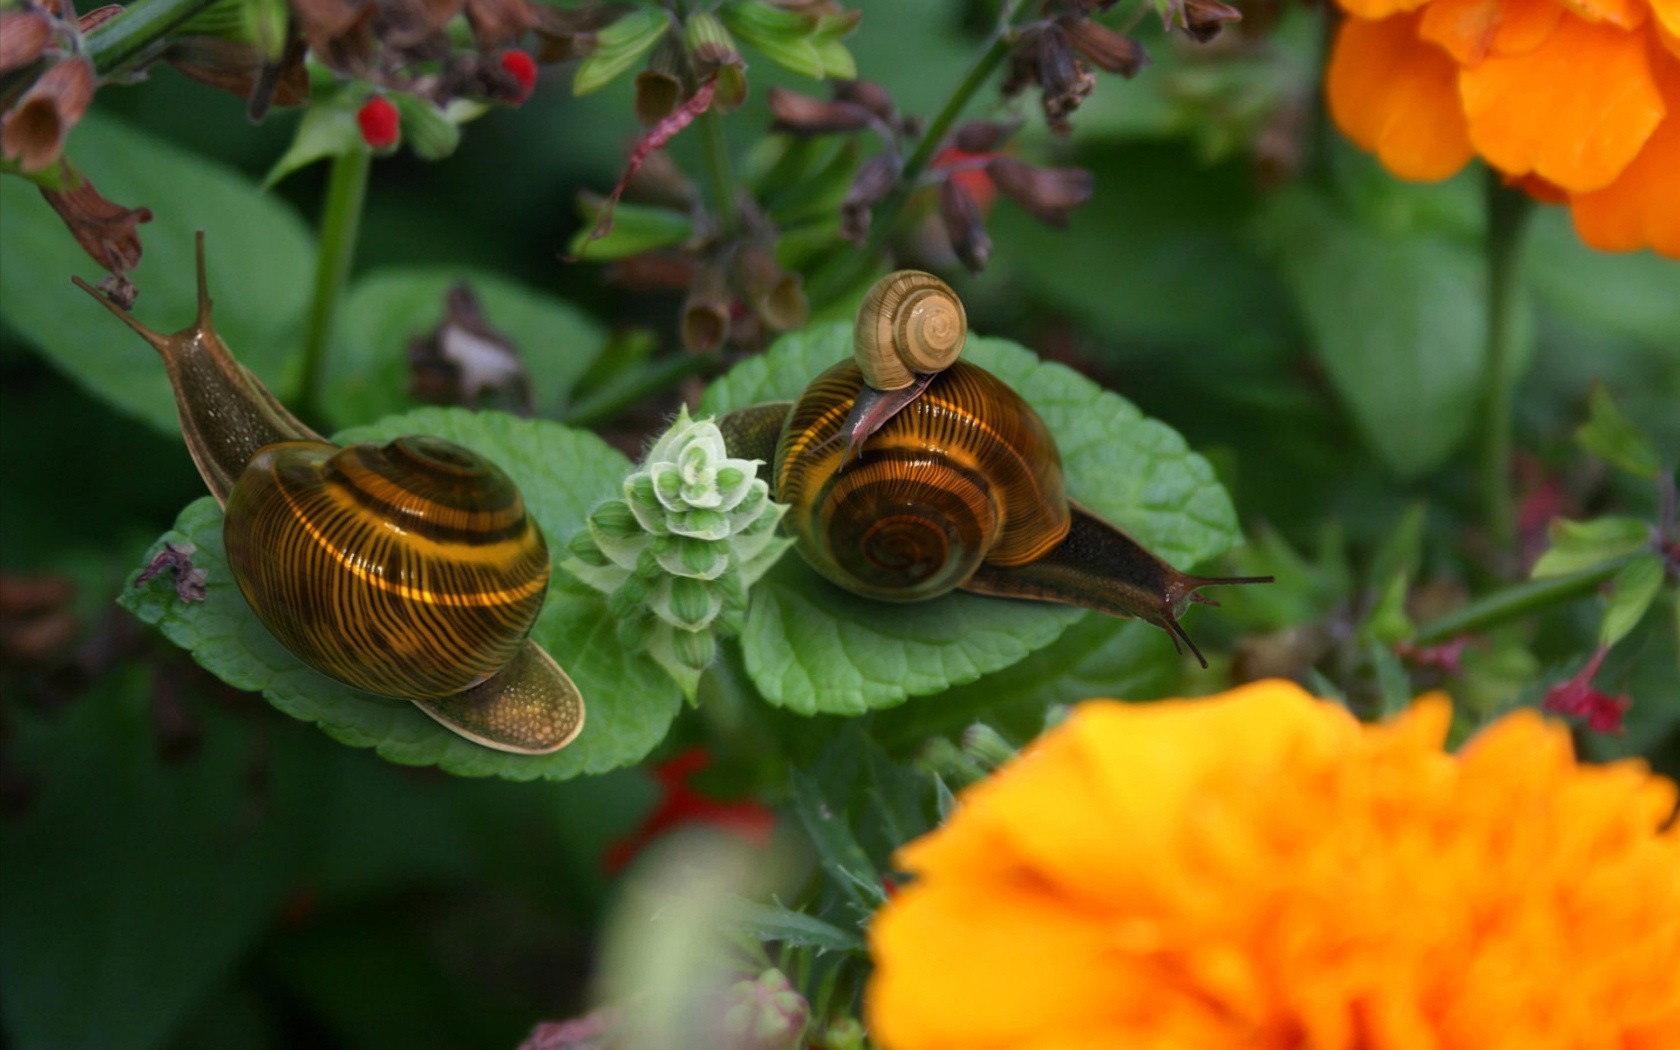 Amazing Snails Family